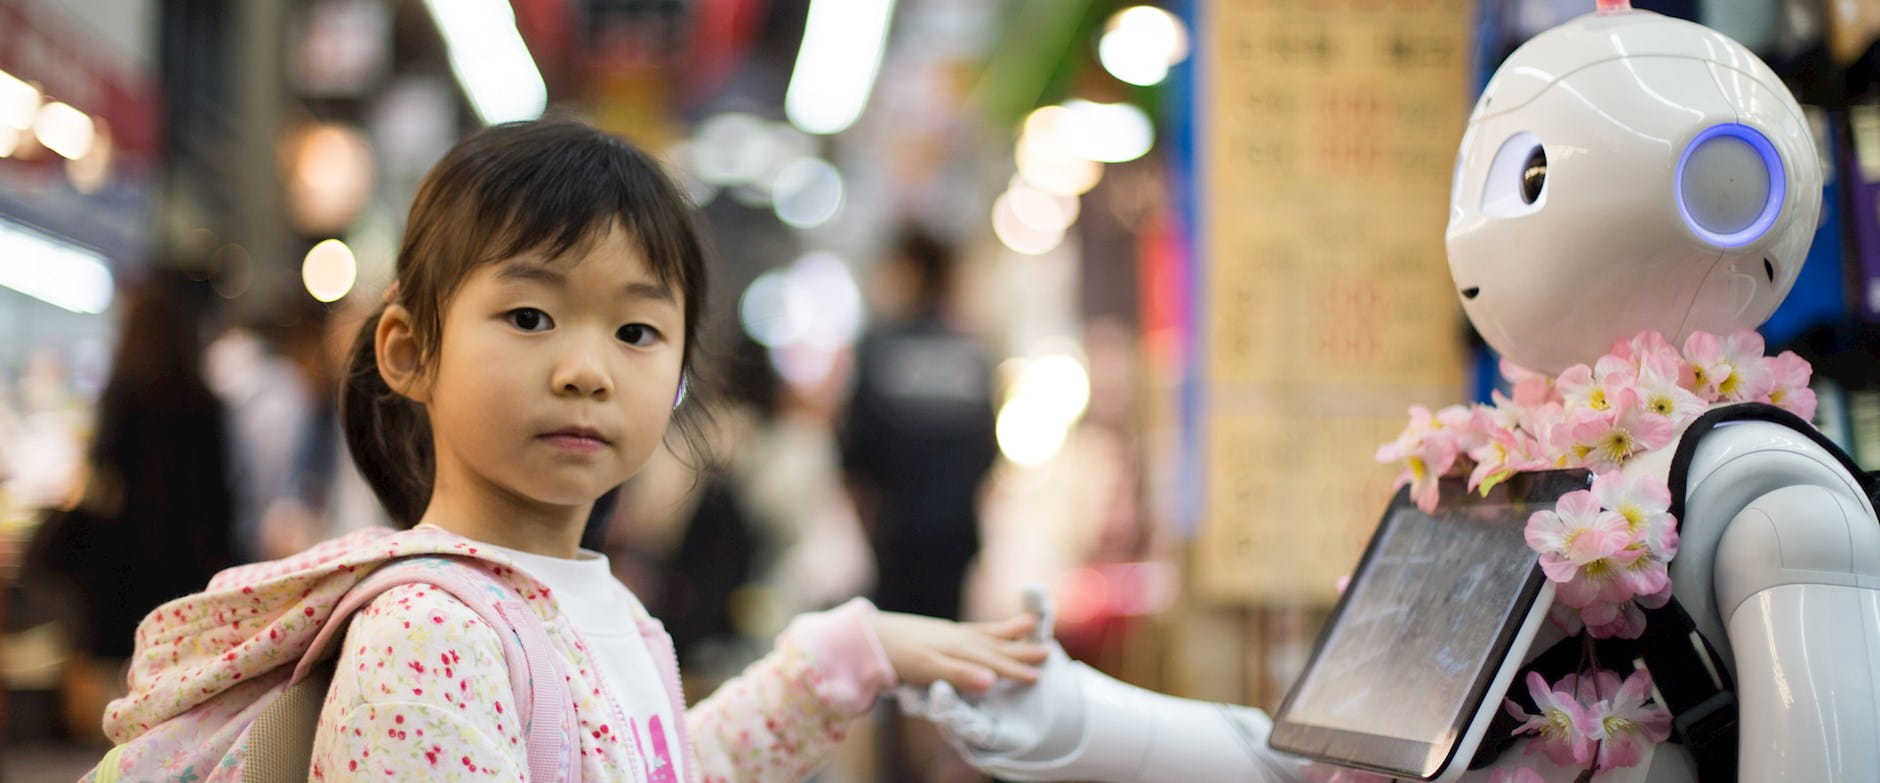 Young girl with humanoid robot